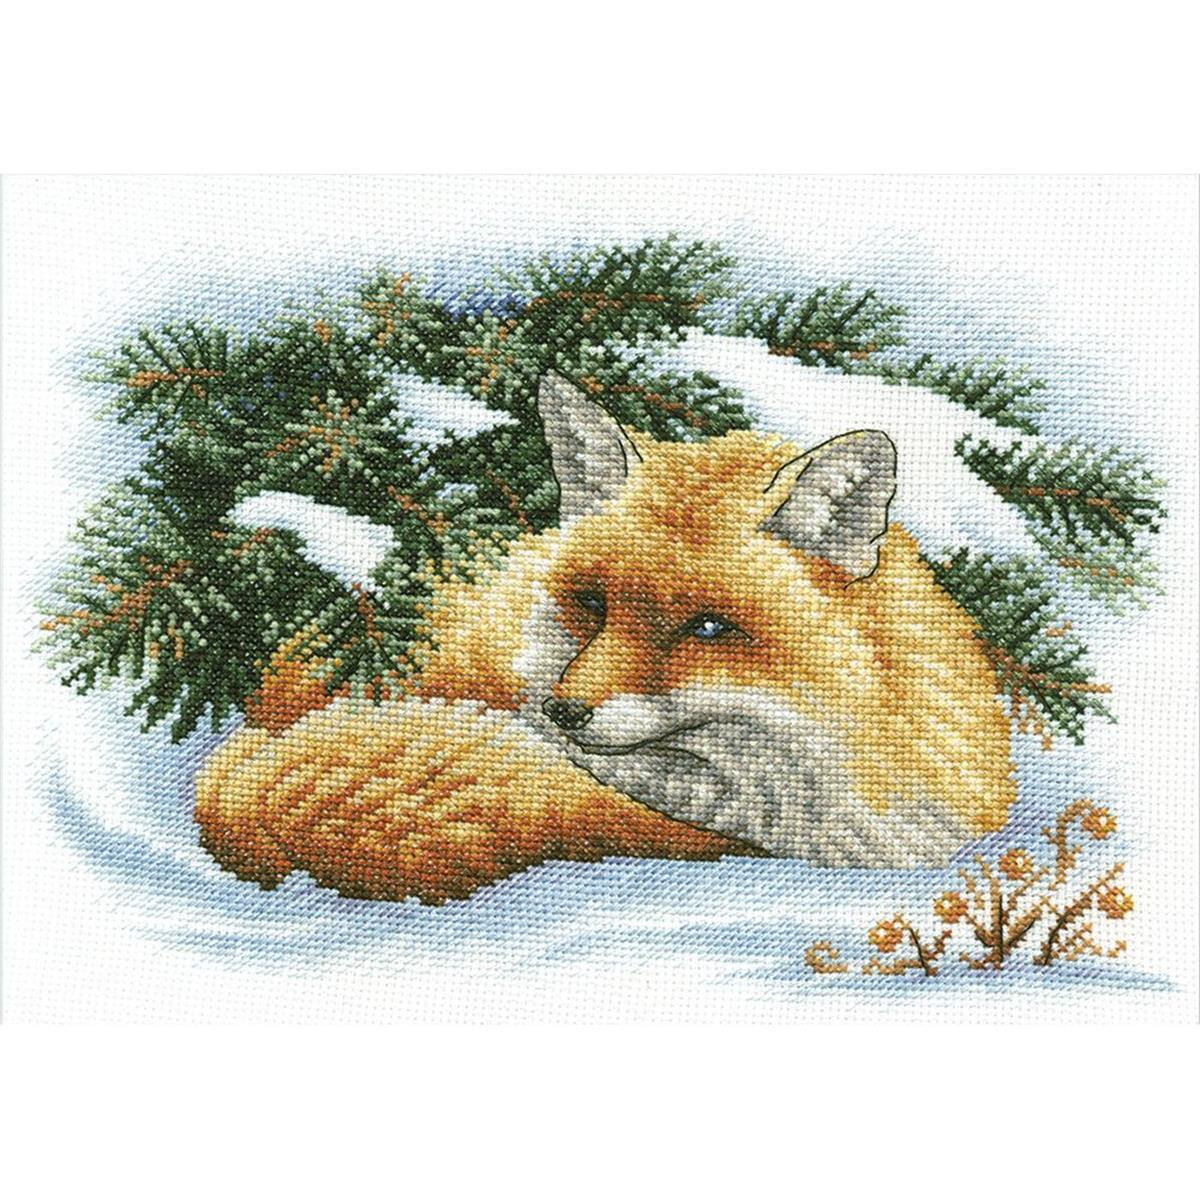 Panna counted cross stitch kit "Little Fox"...